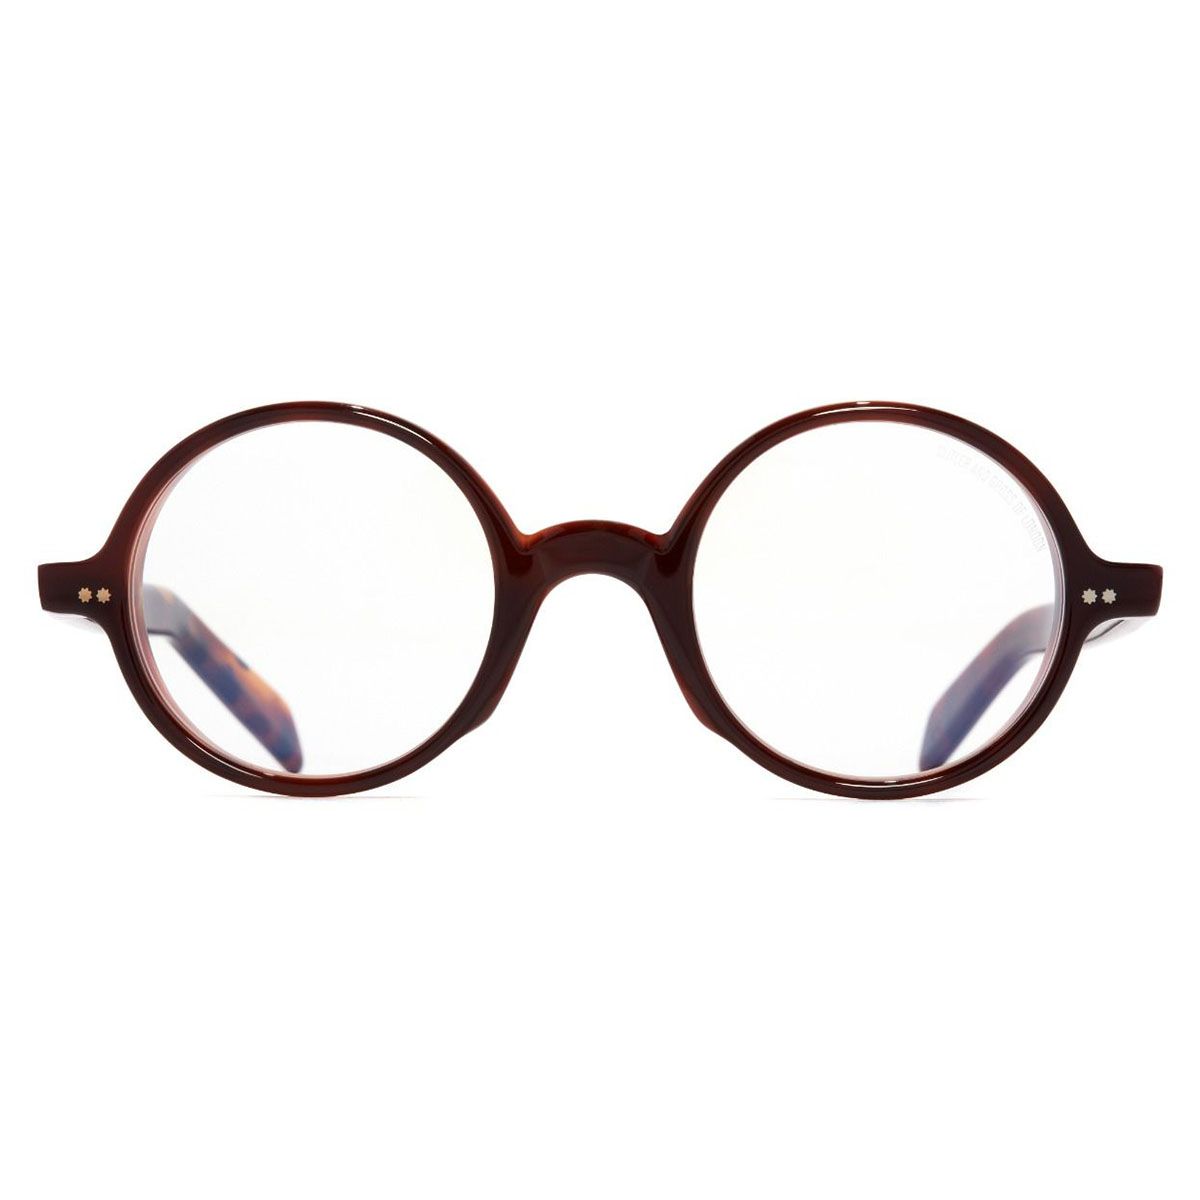 GR01 Round Optical Glasses - Multi Havana Burgundy by Cutler and Gross